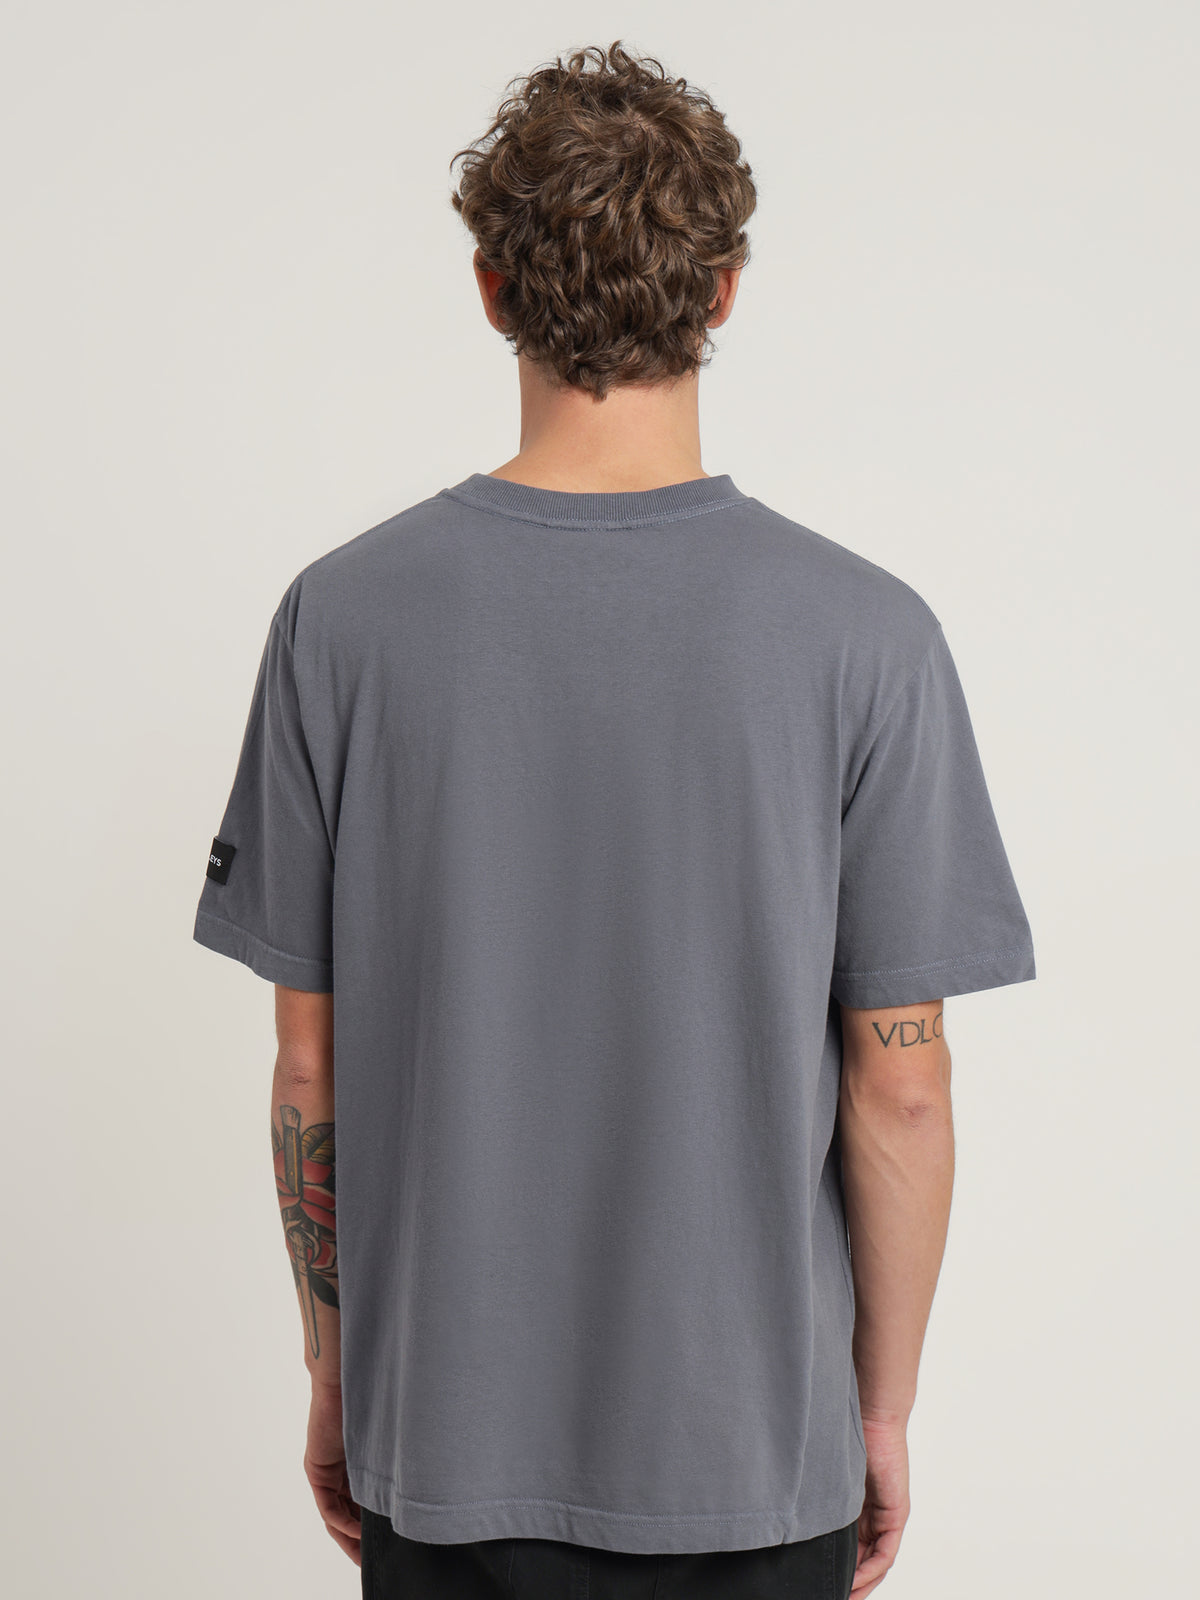 Micro Staple T-Shirt in Slate